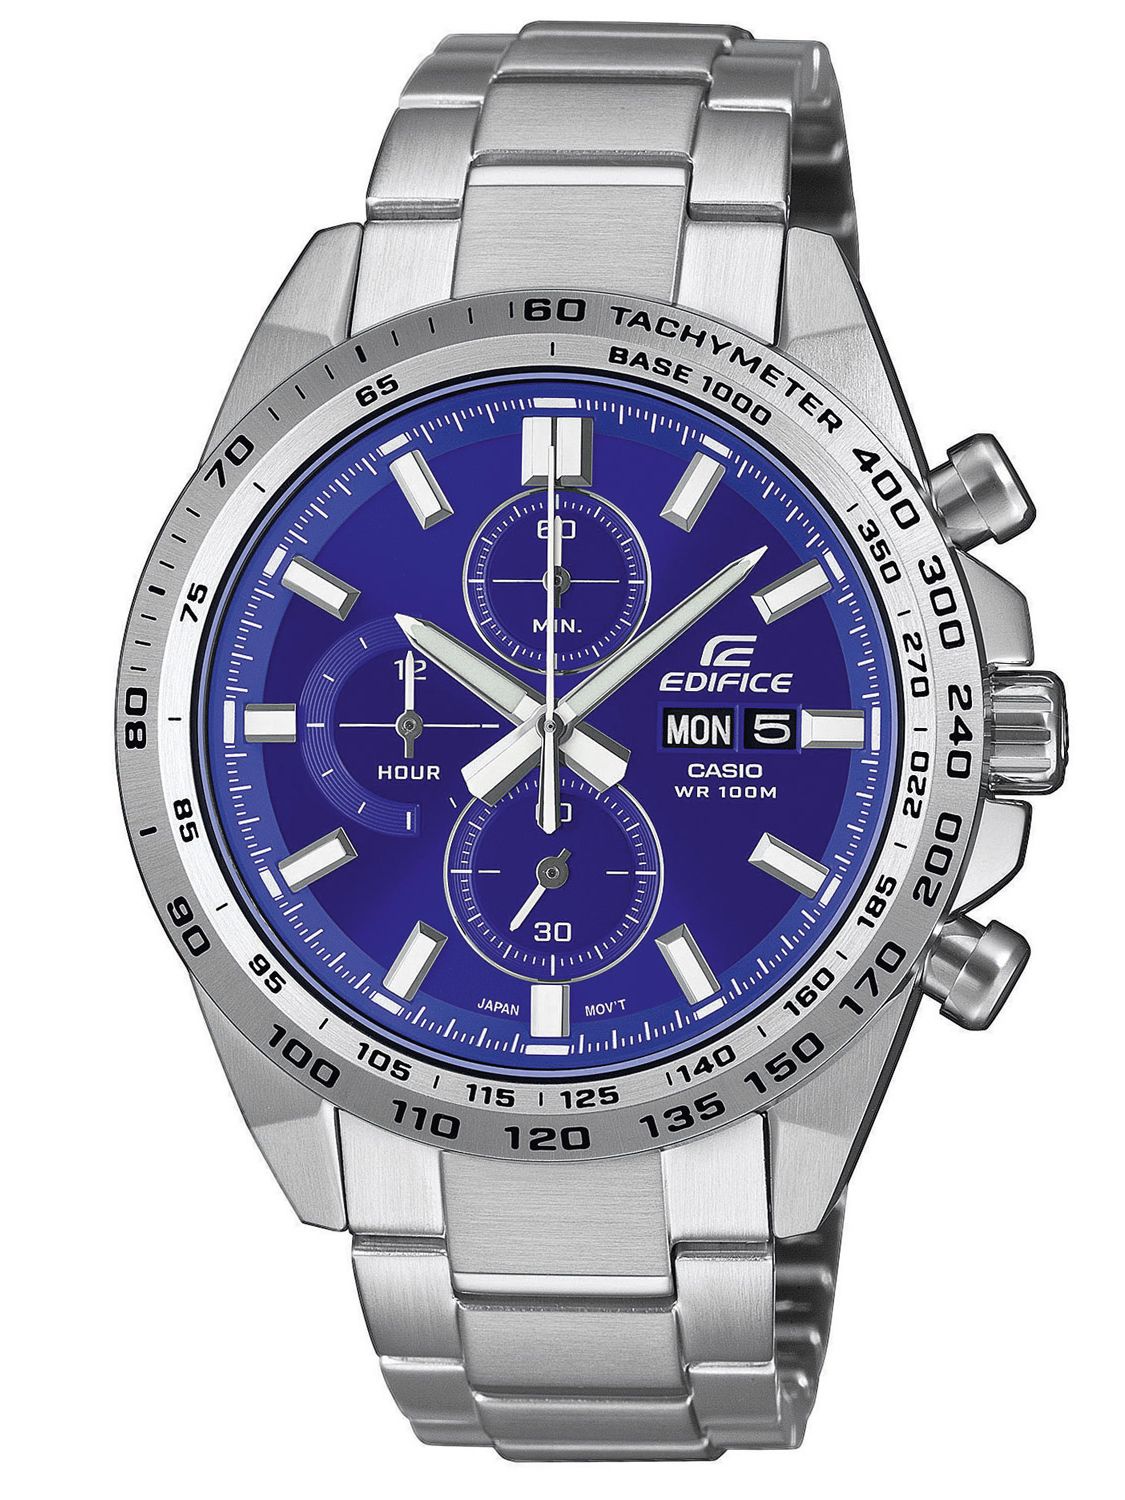 Casio Edifice Chronograph Men's Watch Steel/Blue EFR-574D-2AVUEF • uhrcenter